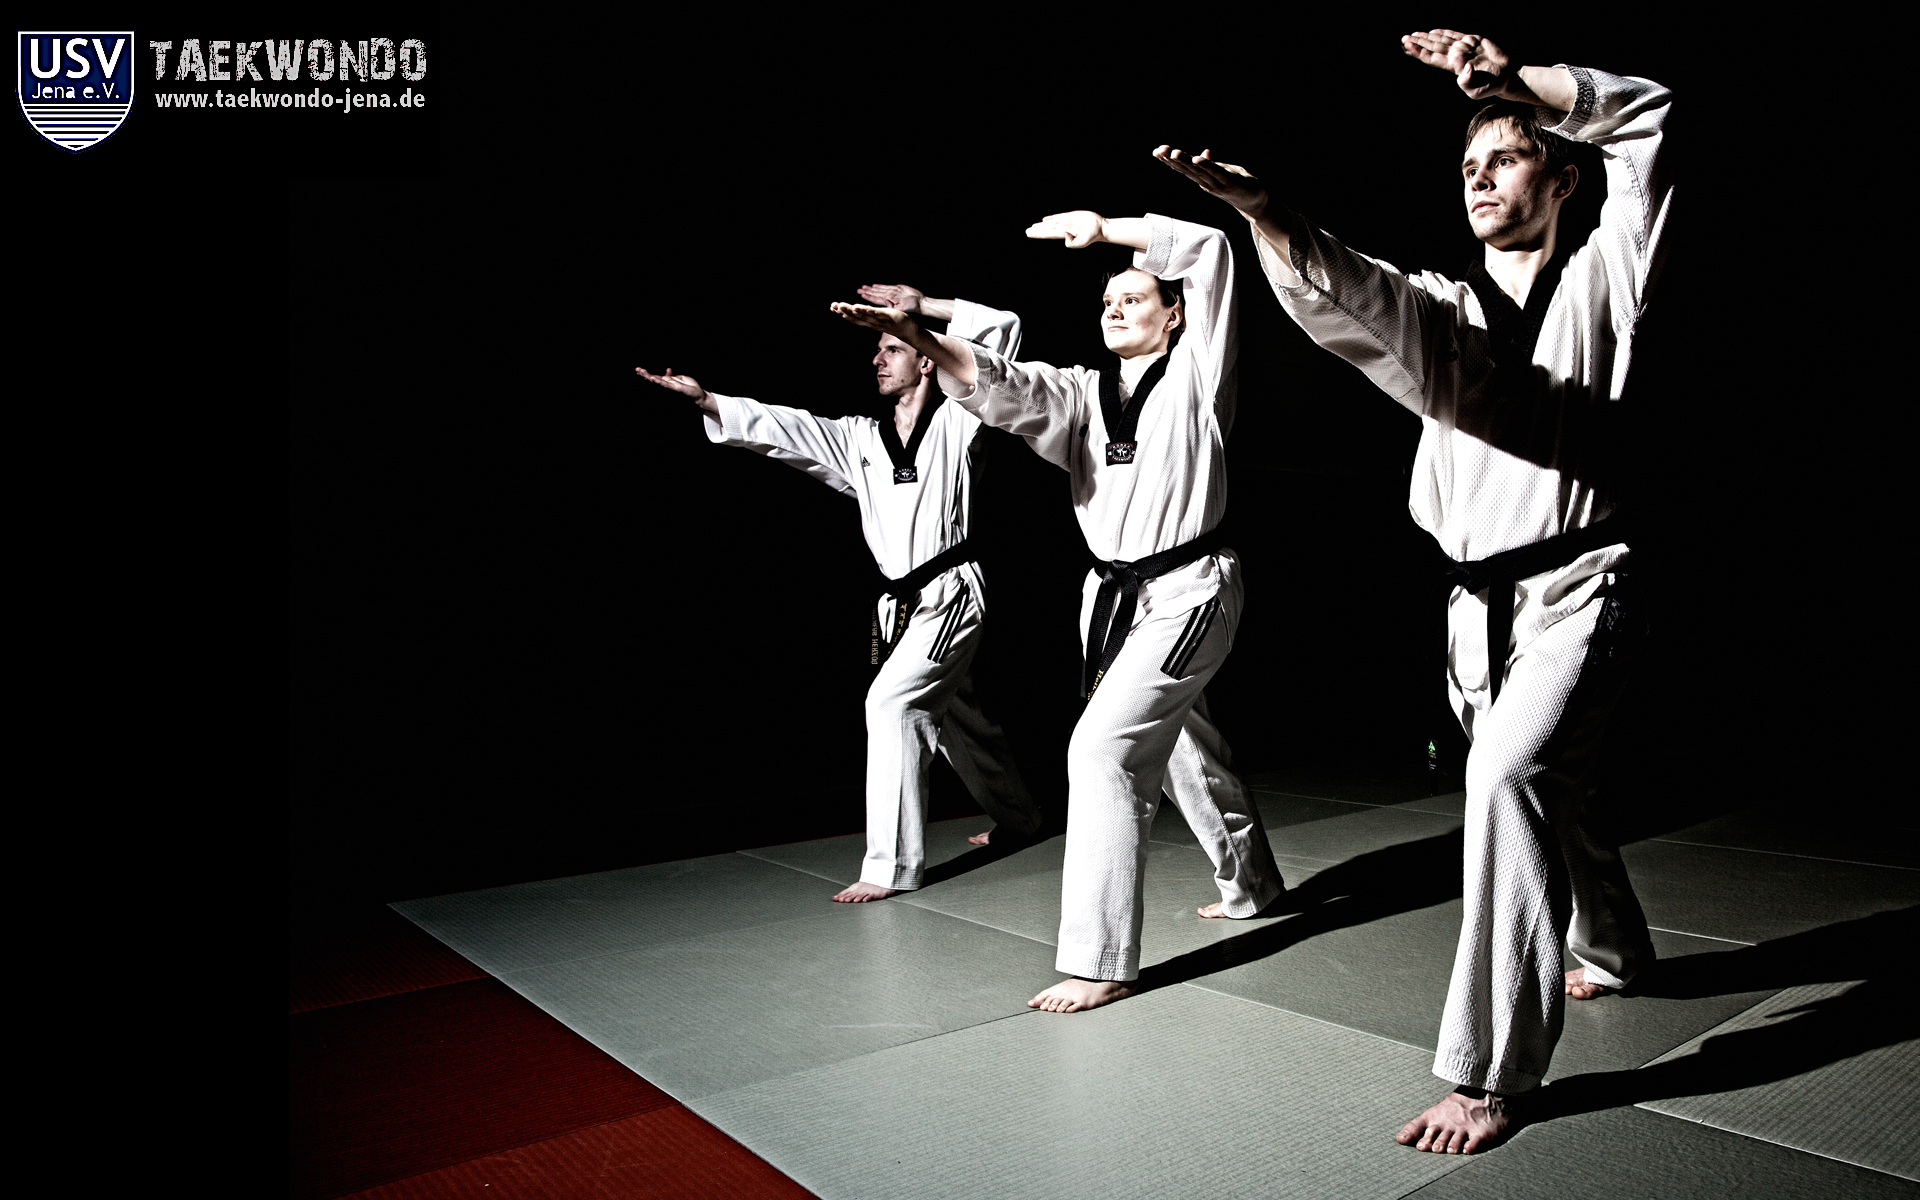 Taekwondo desktop wallpaper